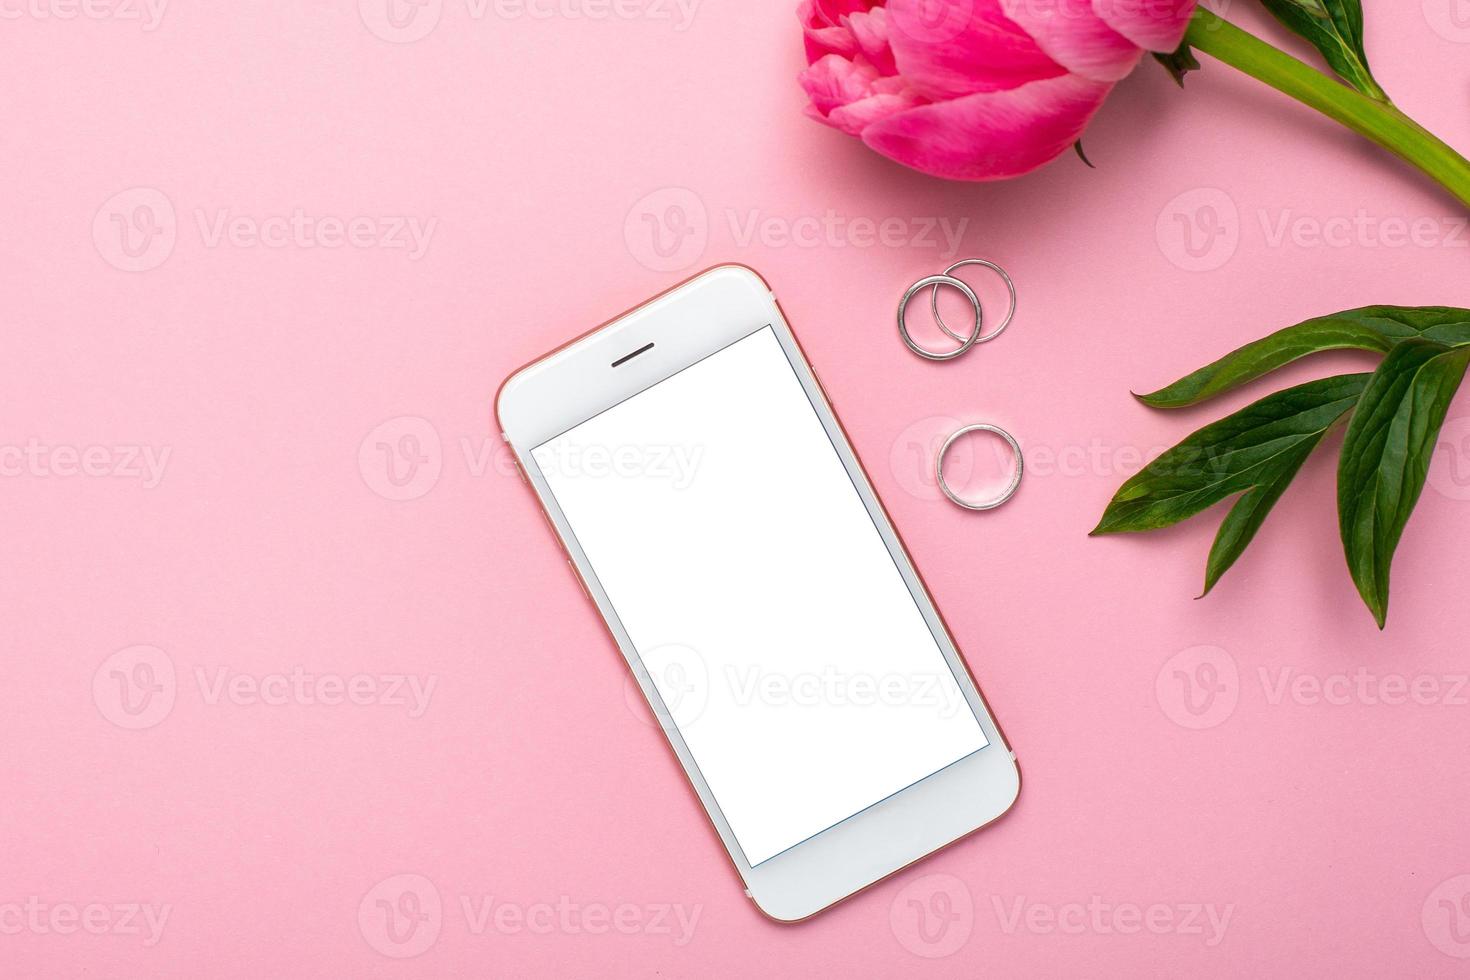 mobiel telefoon bespotten omhoog en pioen bloem Aan roze pastel tafel in vlak leggen stijl. vrouw werken bureau.zomer kleur foto